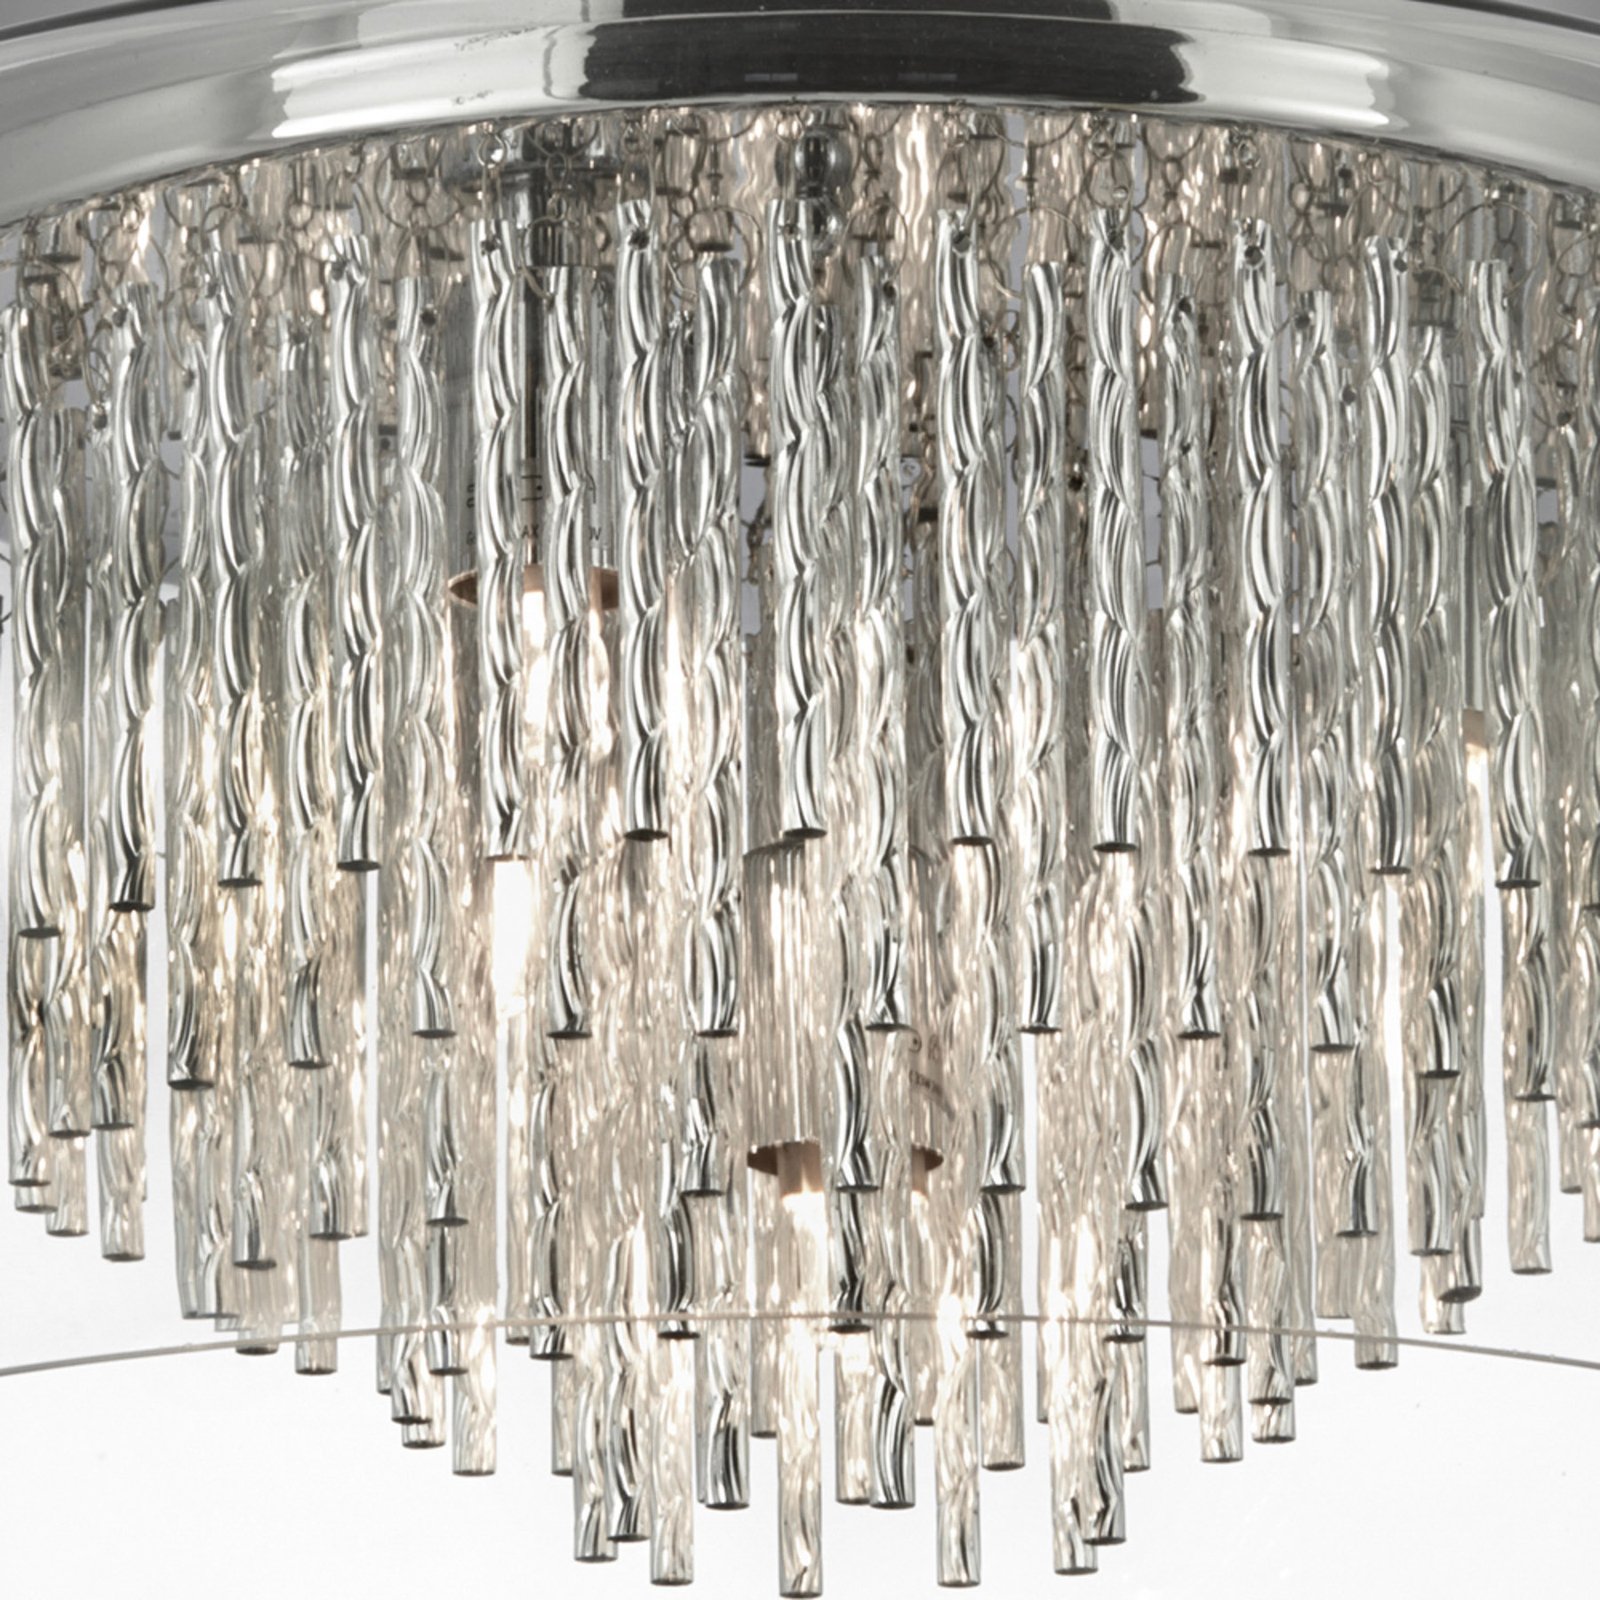 Curva glass ceiling light with aluminium spirals